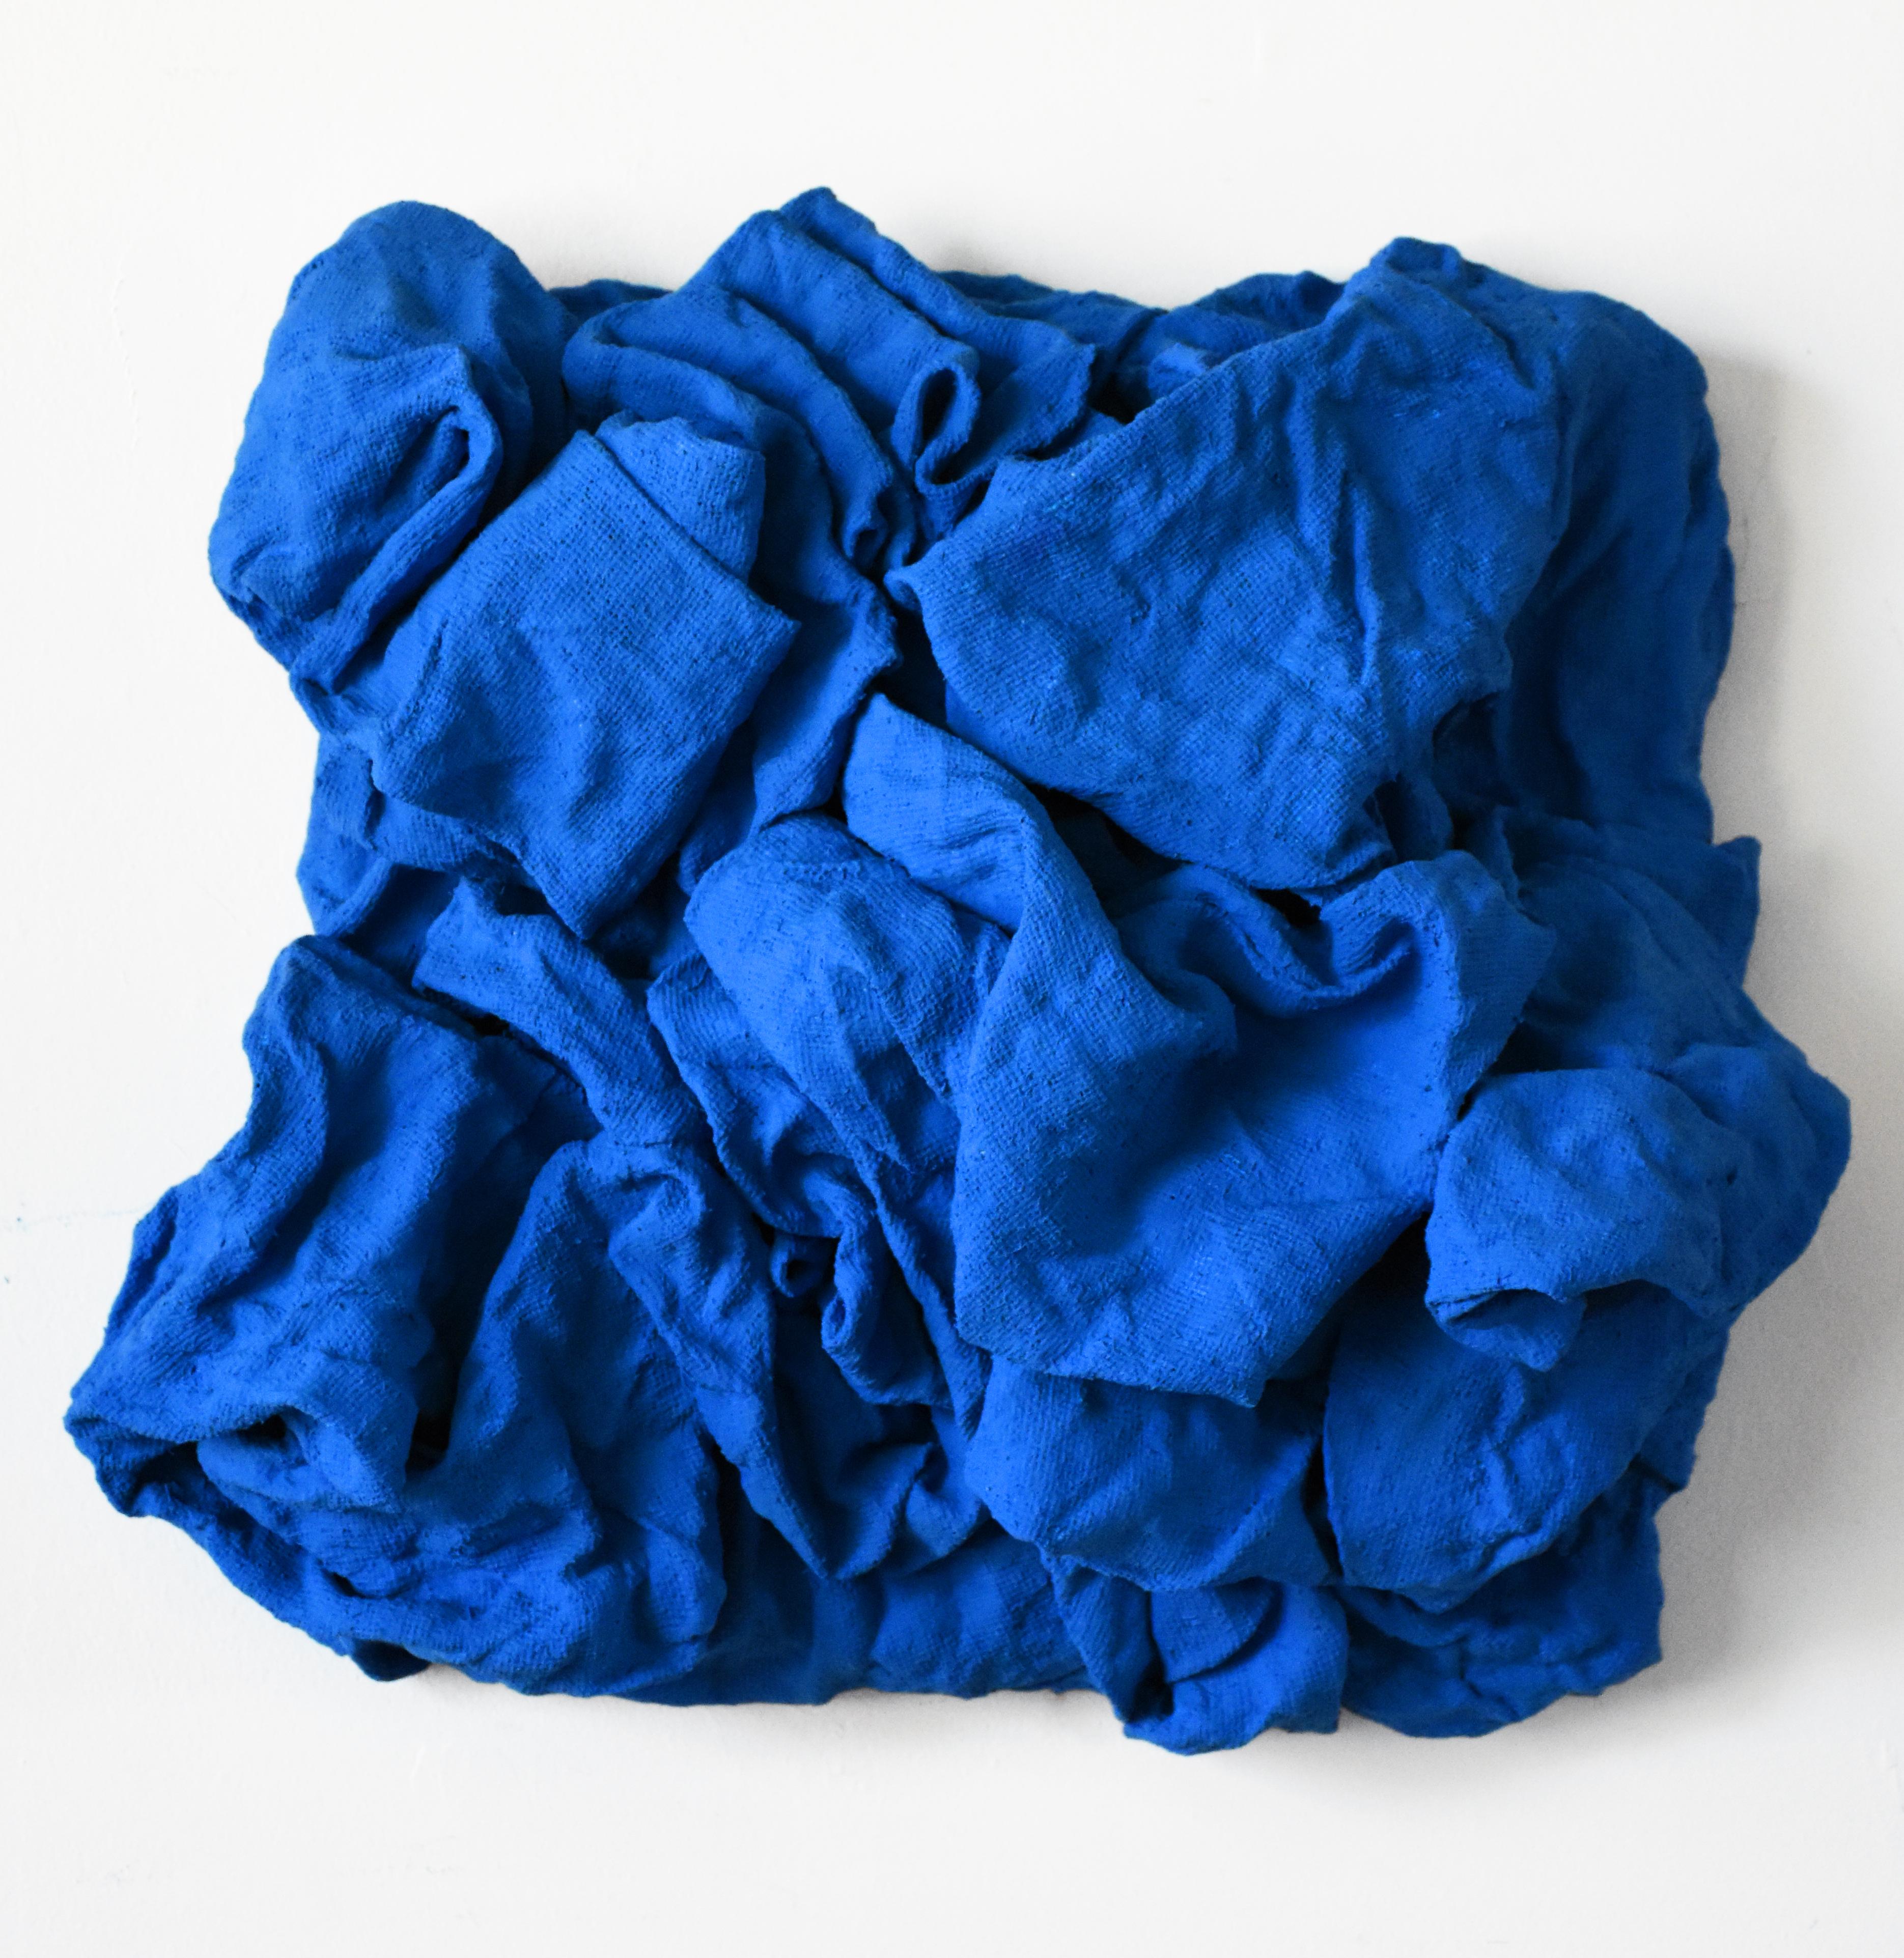 Electric Blue Folds - Mixed Media Art by Chloe Hedden